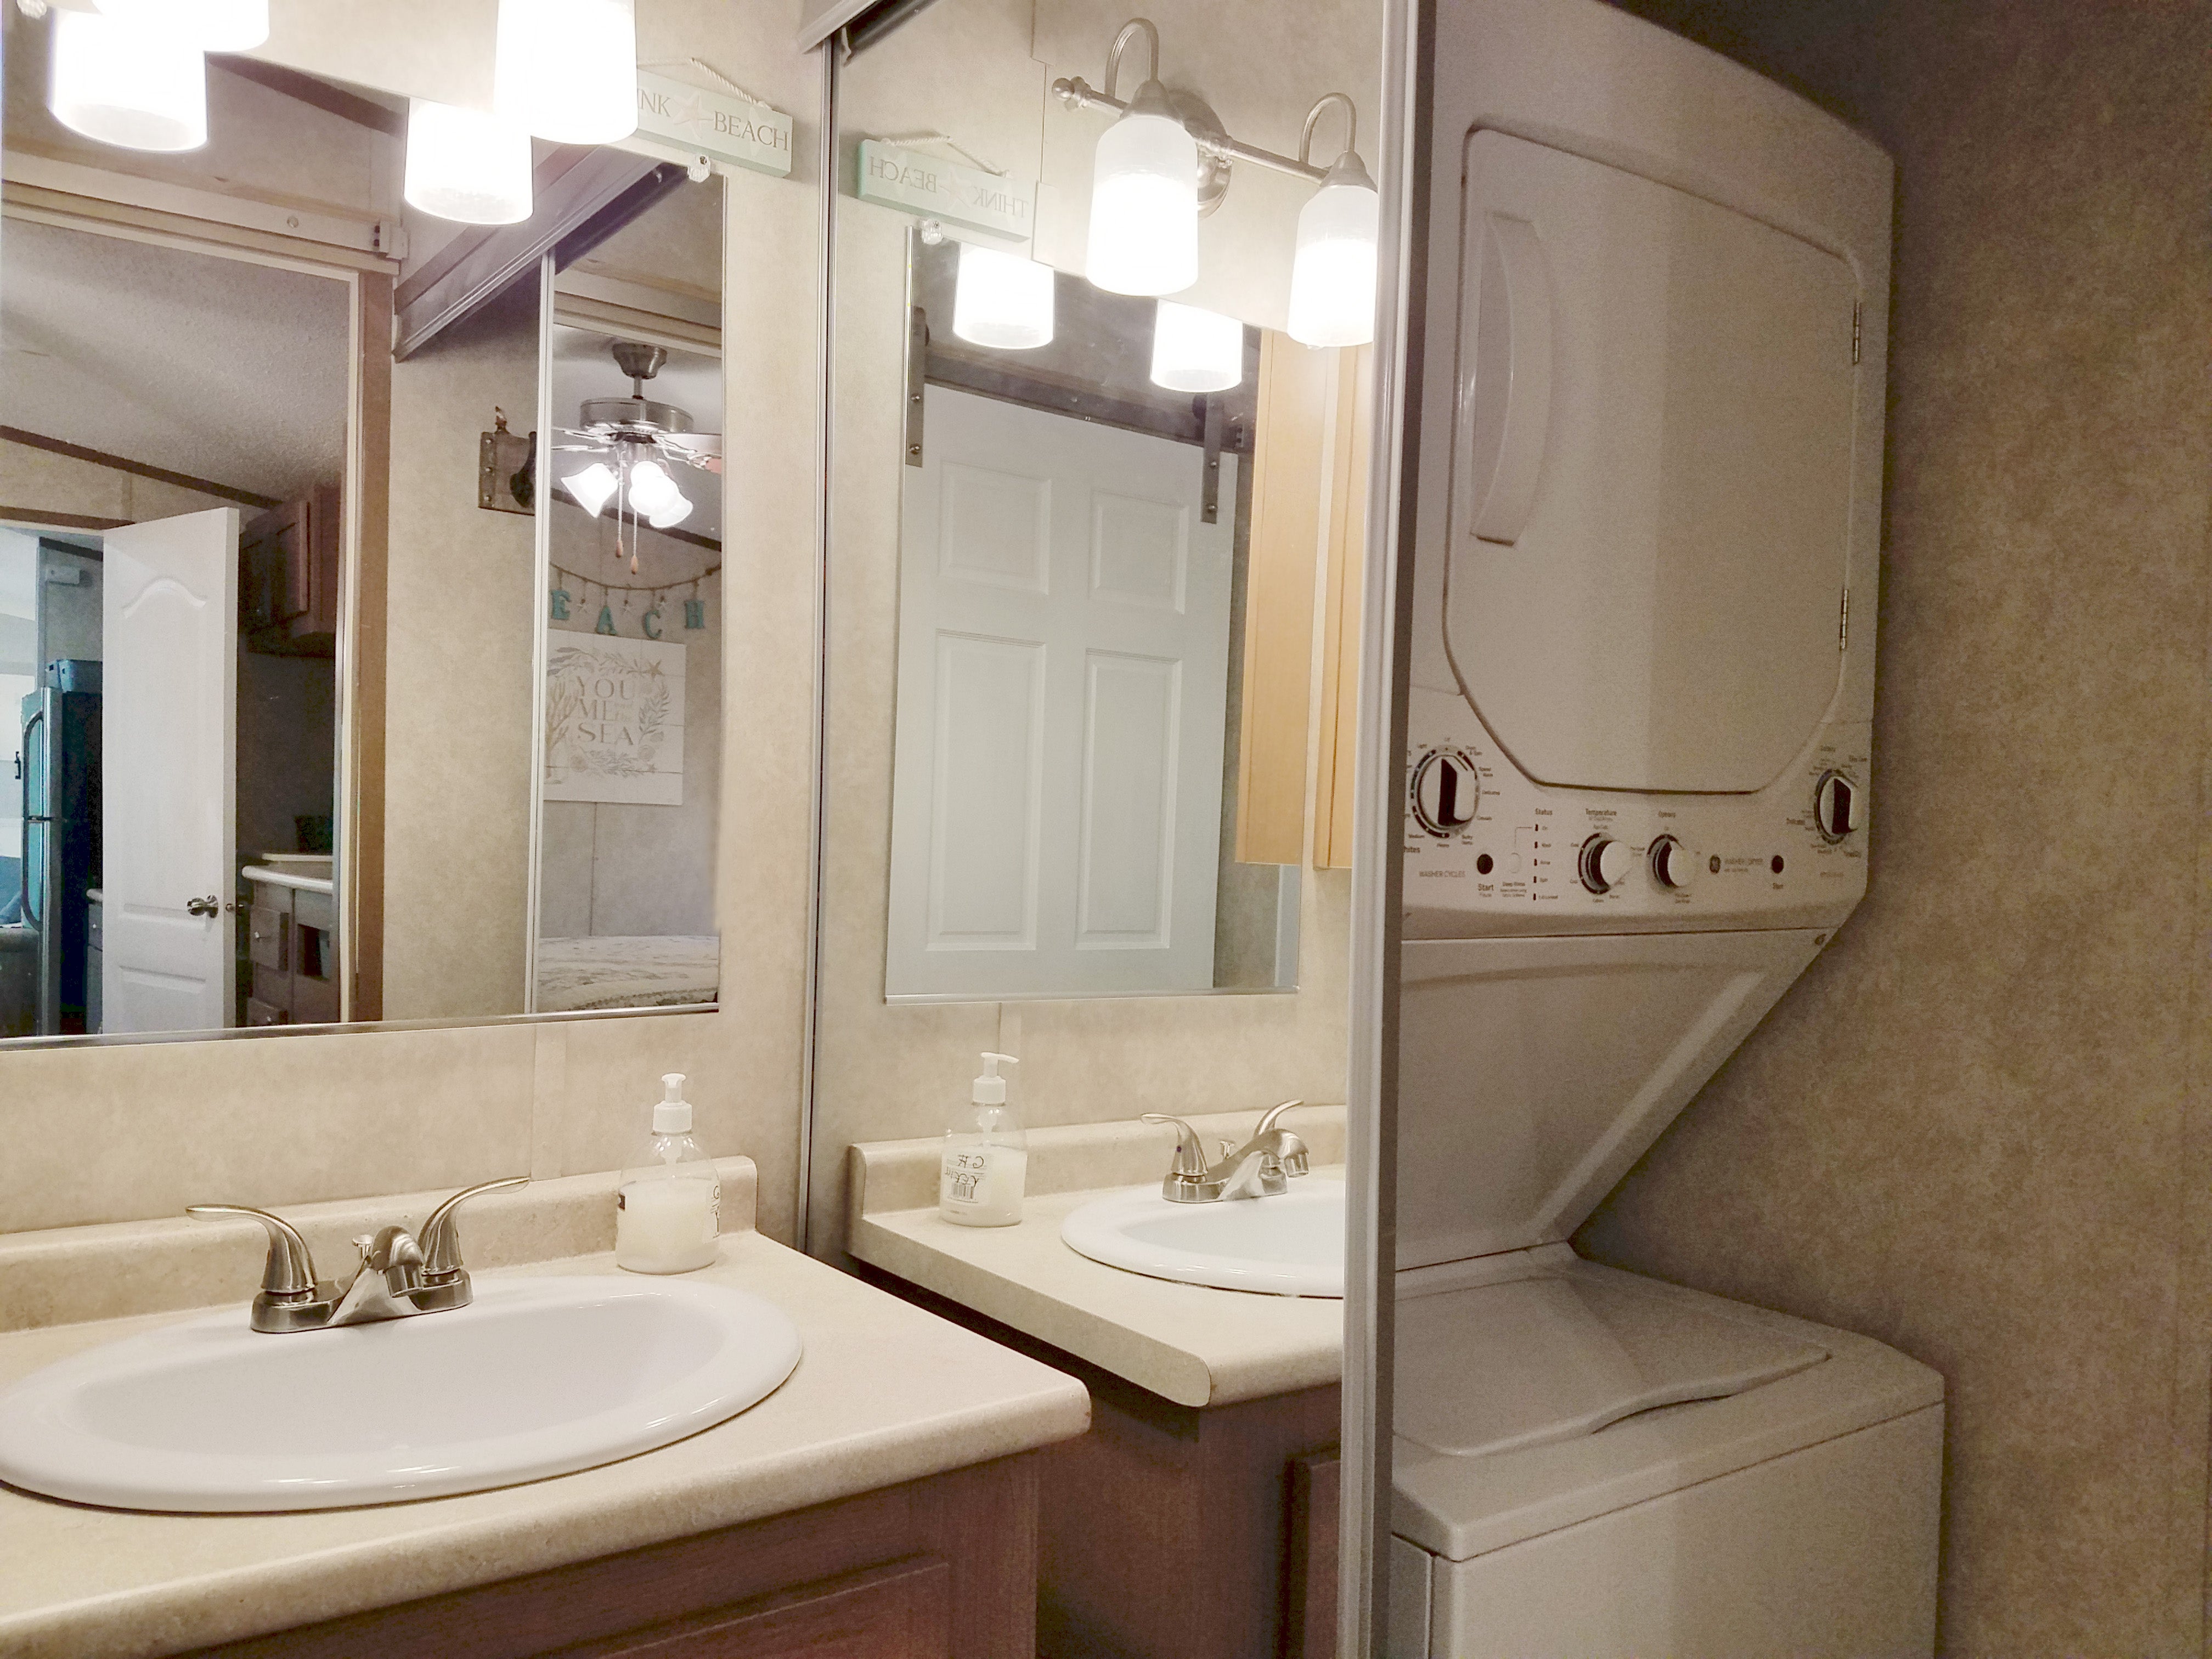 WasherDryer and Bathroom Vanity